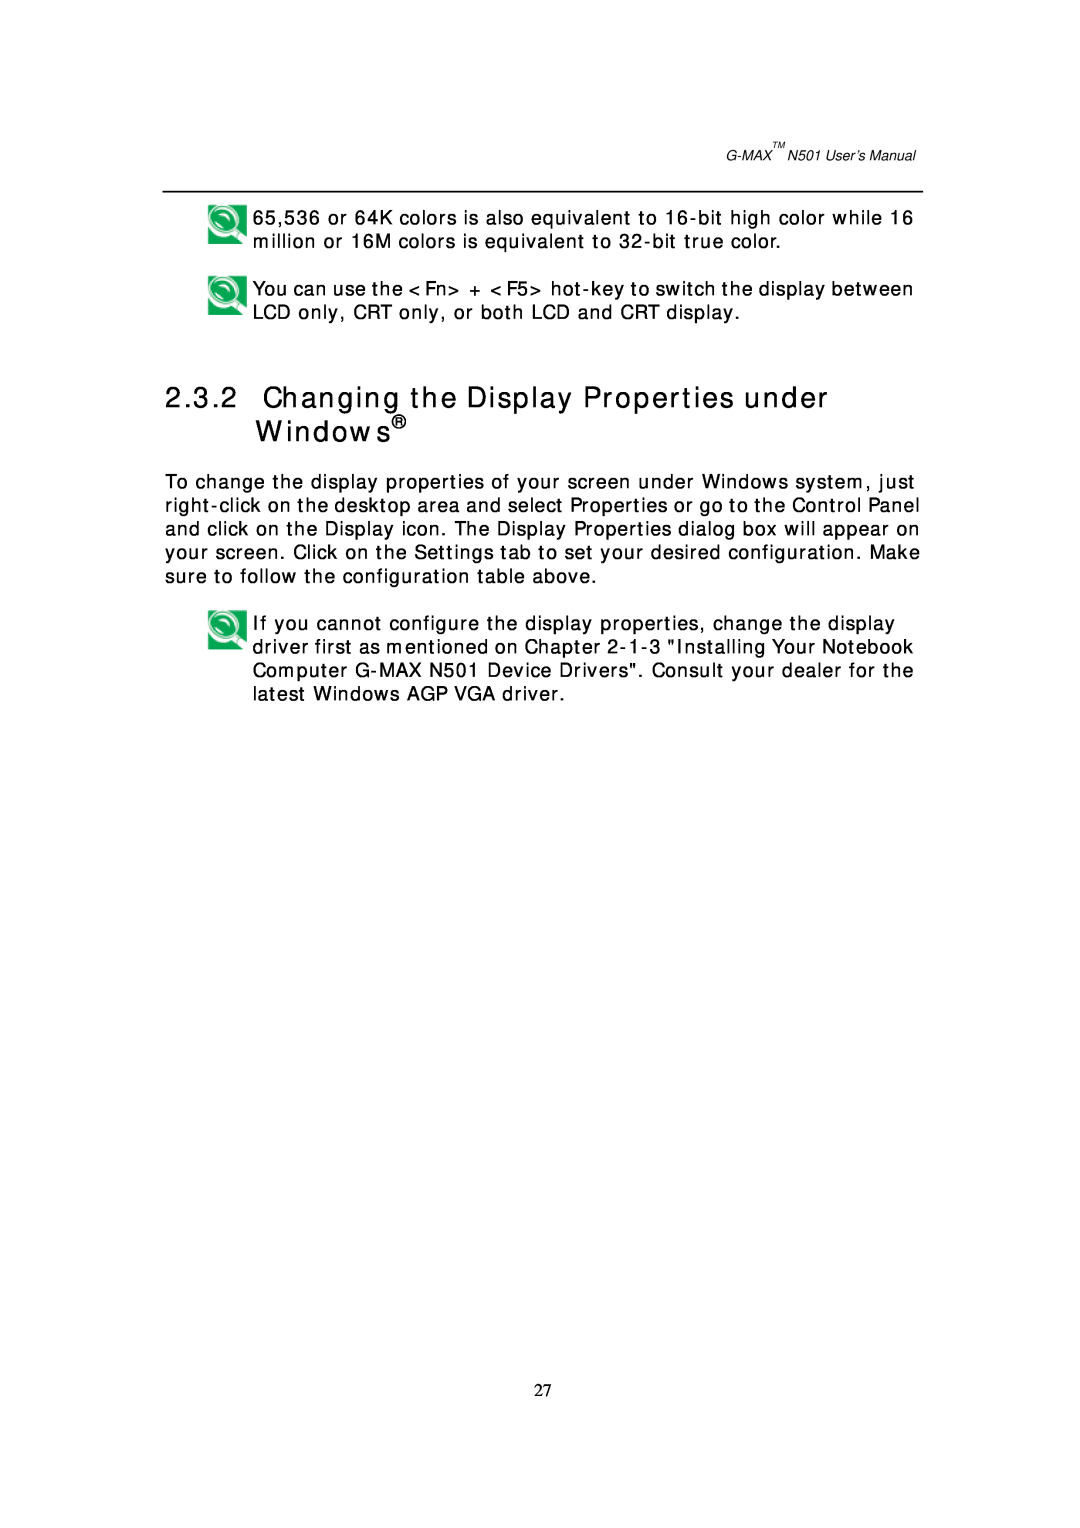 Gigabyte G-MAX N501 user manual Changing the Display Properties under Windows 